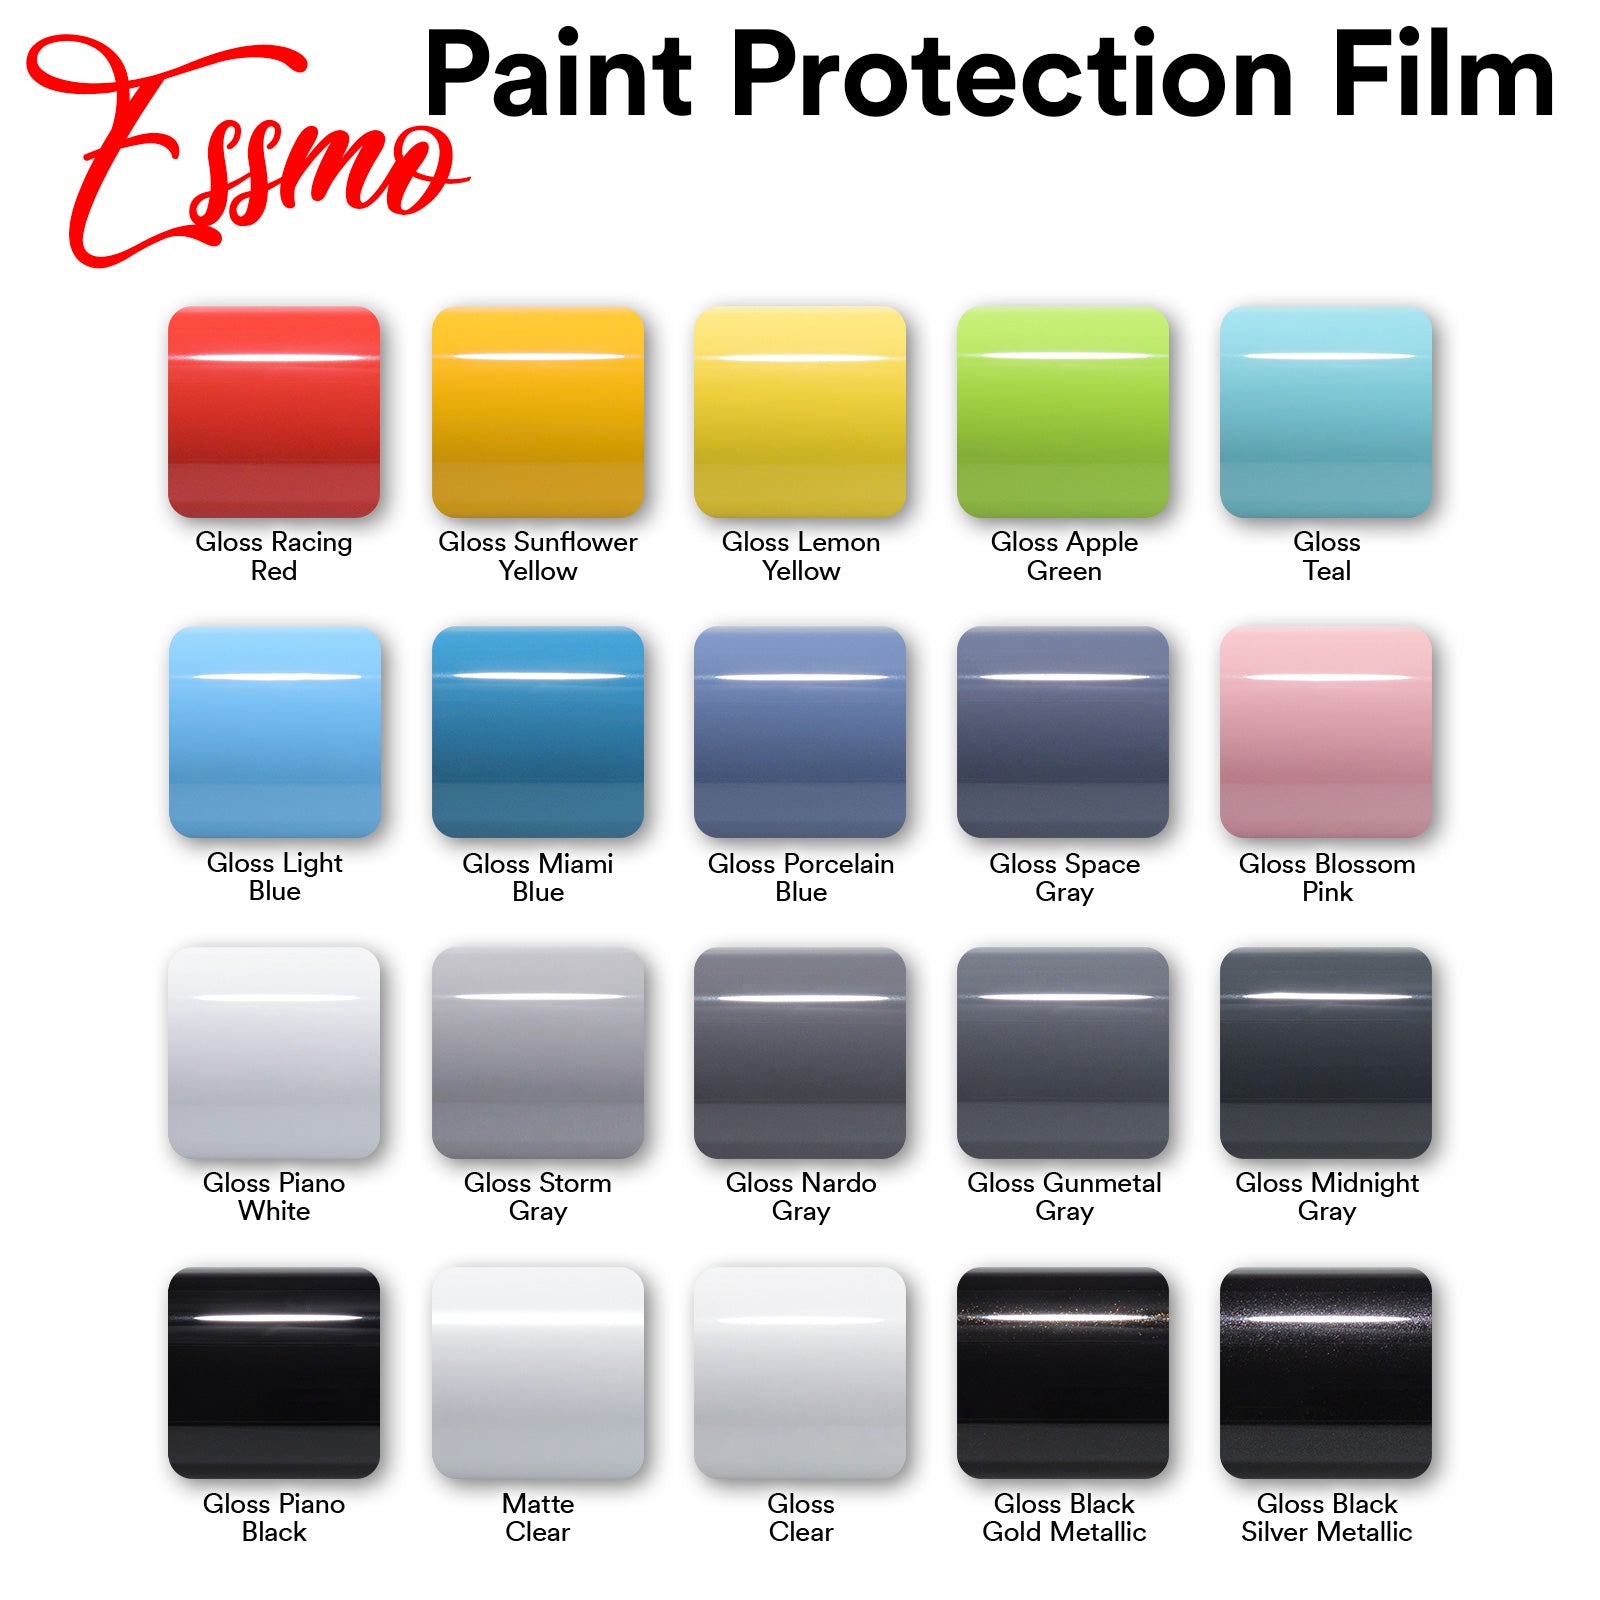 ESSMO Black Silver Metallic Paint Protection Film Gloss – Essmovinyl